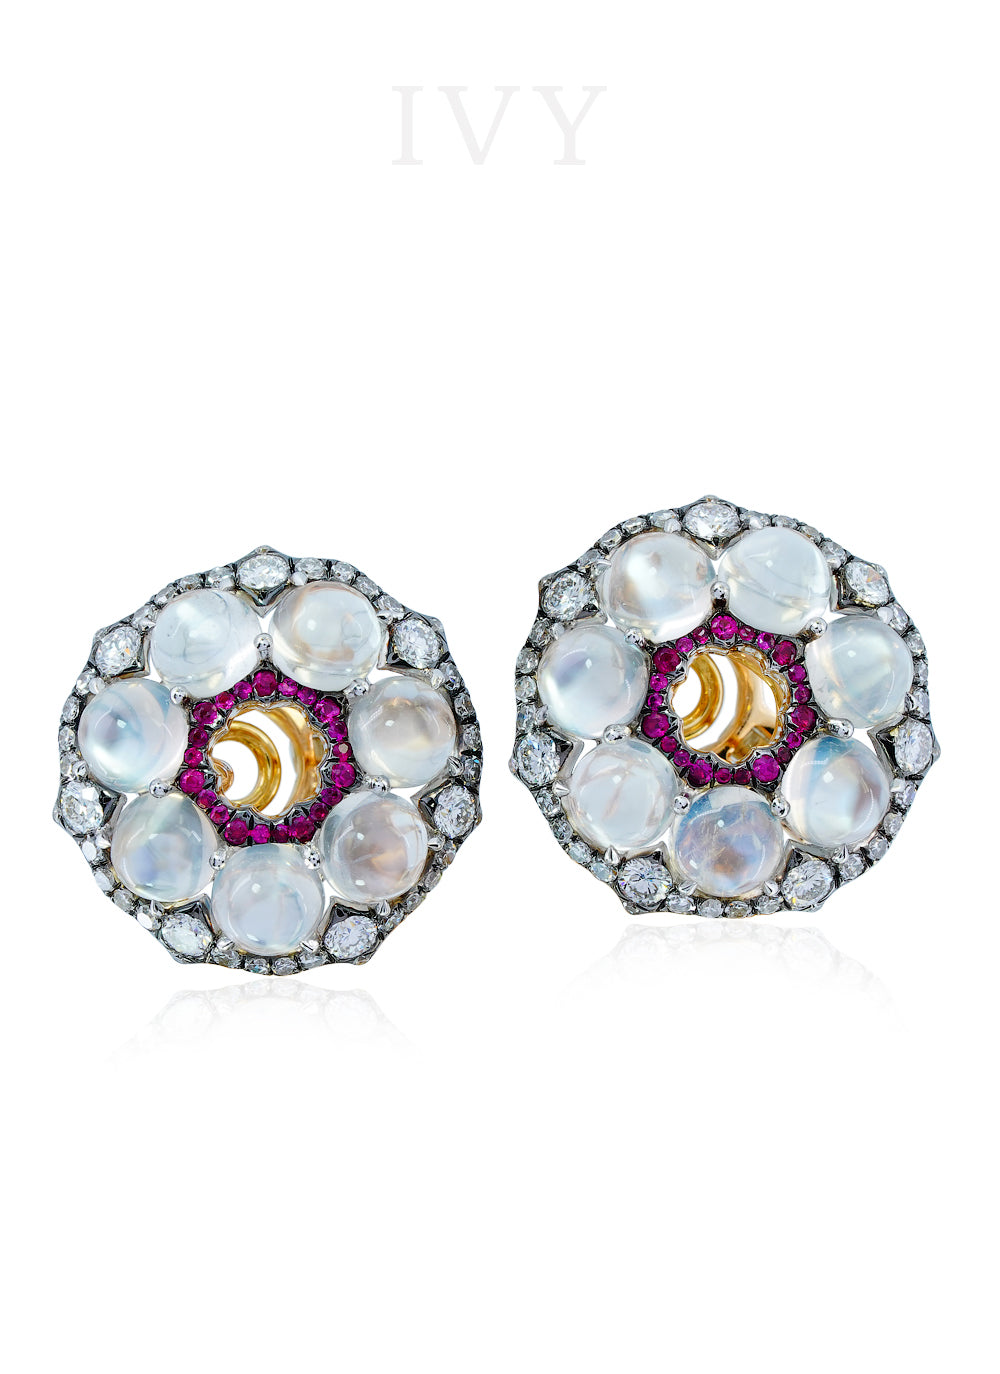 Moonstone Wreath Earrings